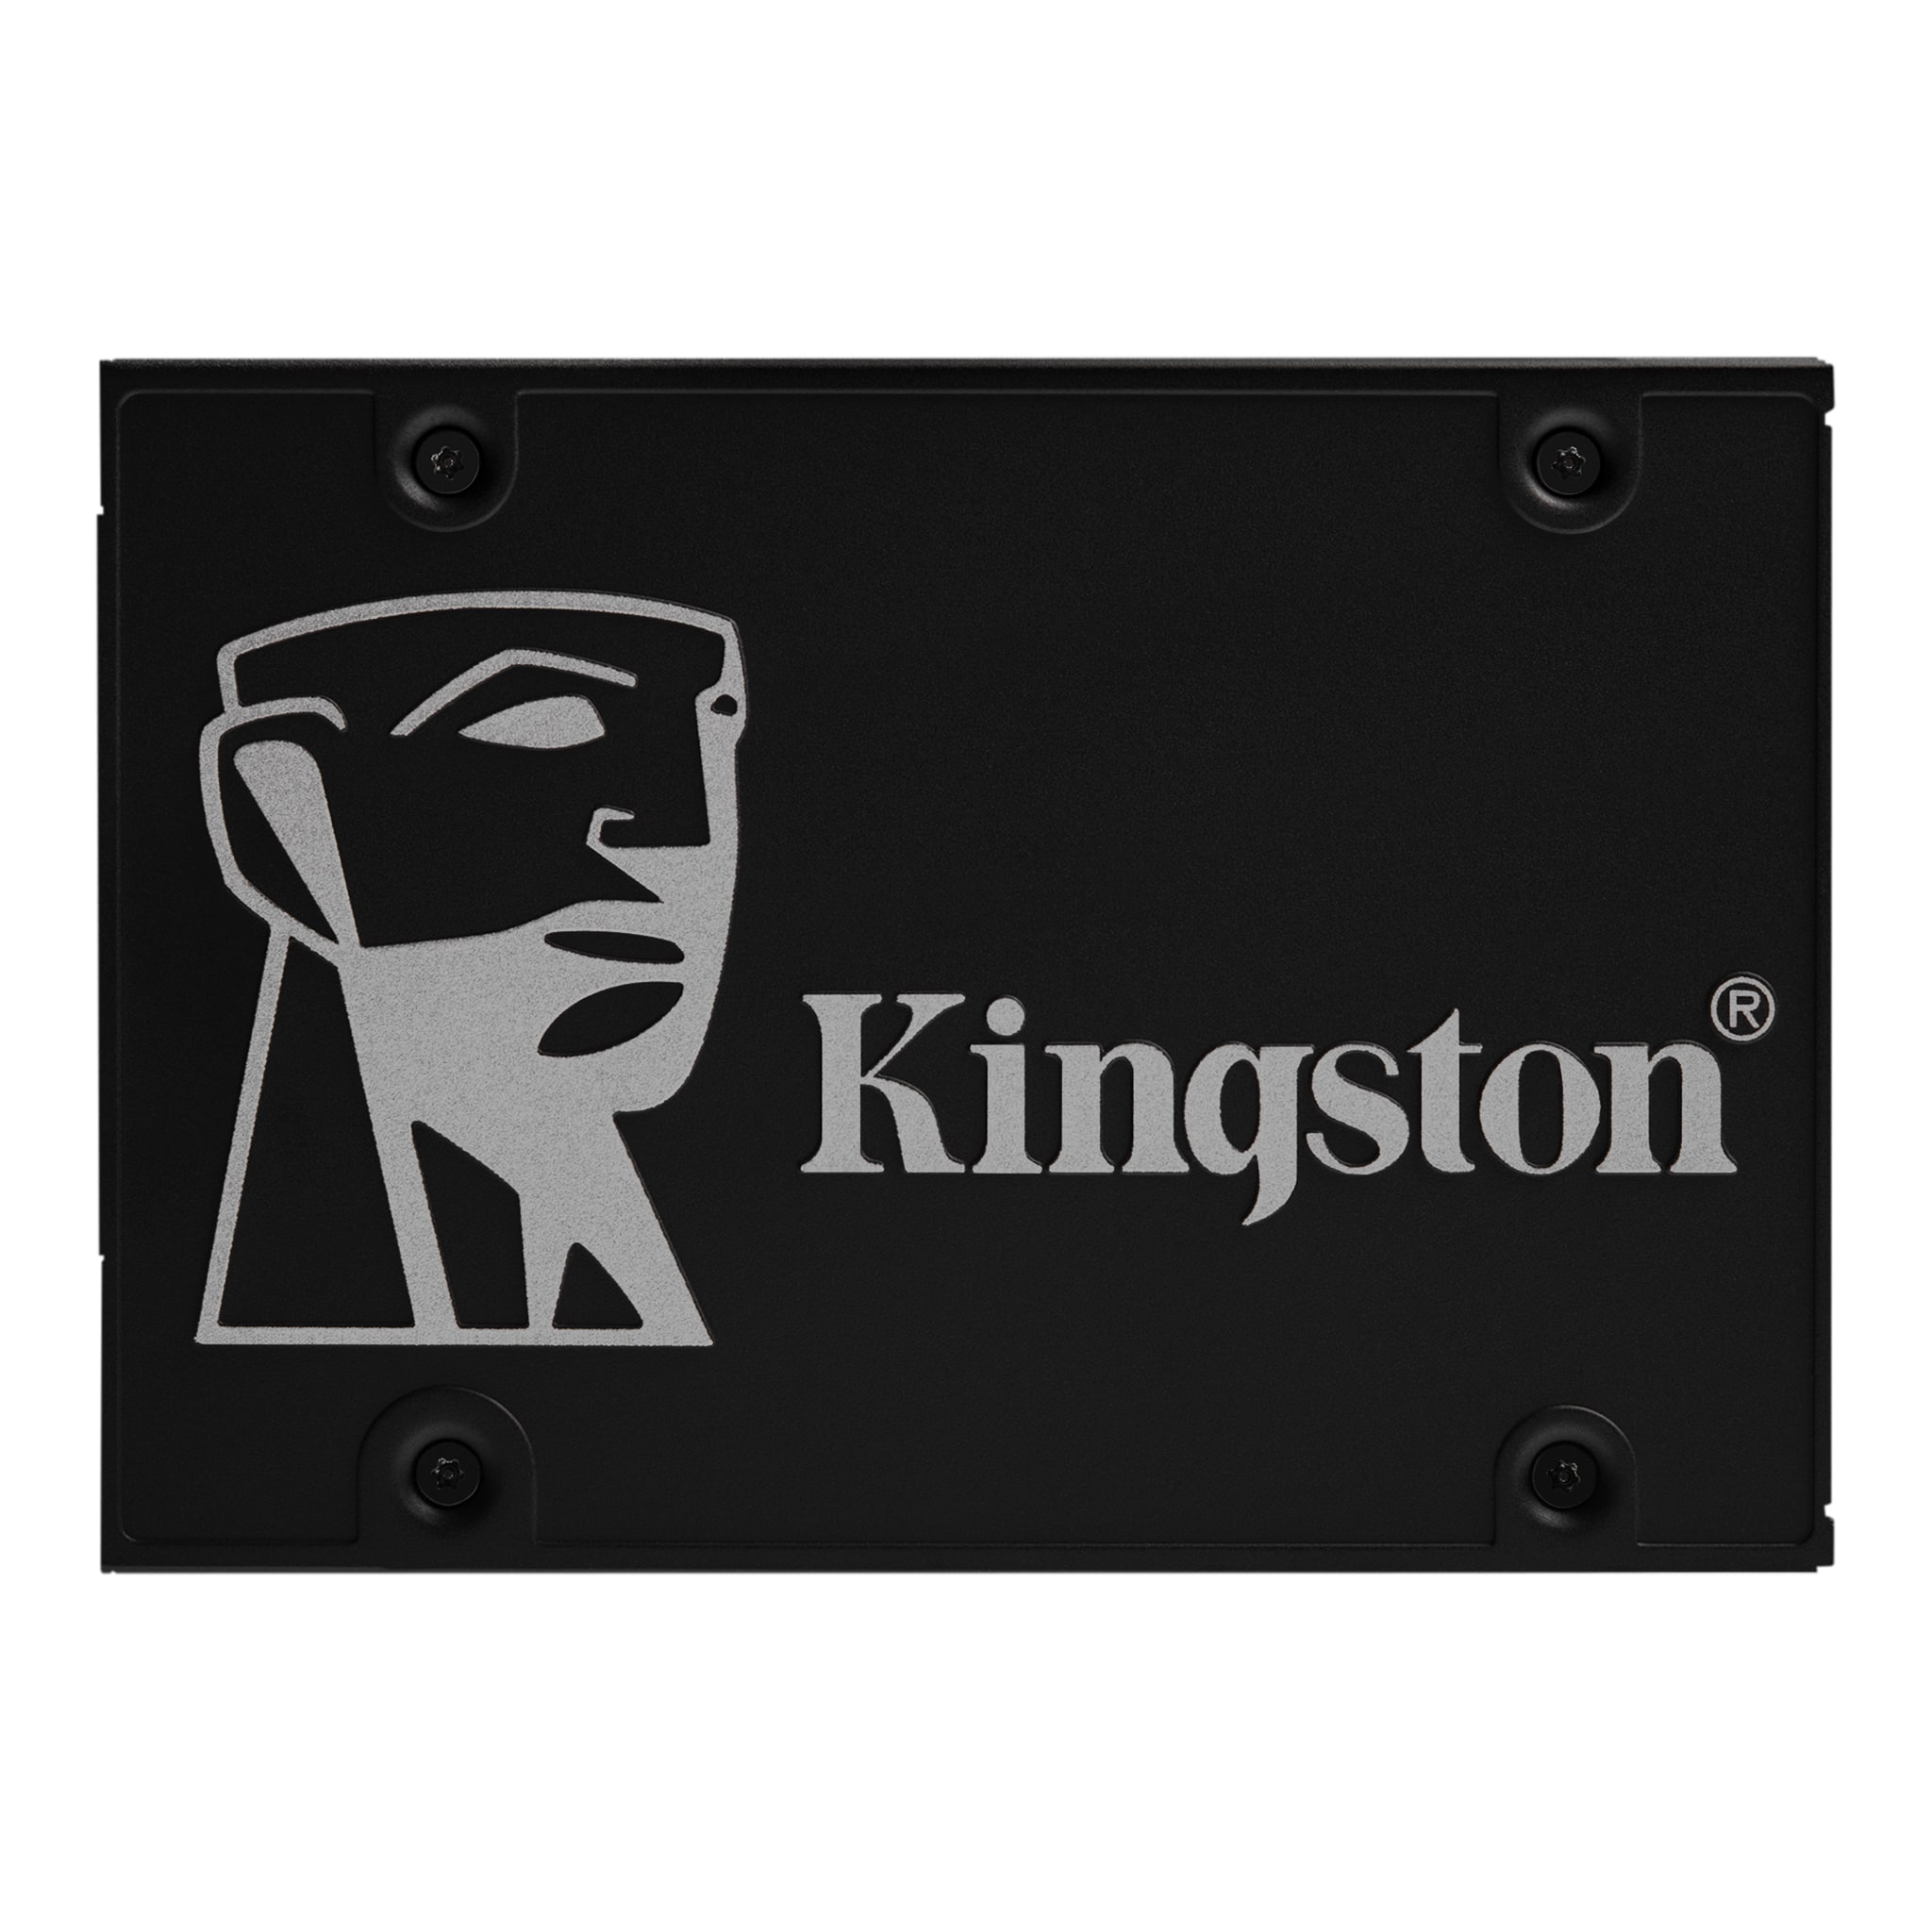 Kingston KC600 512GB 2.5' 3D TLC NAND SATA SSD 550/520MB/s 90K/80K IOPS 300TBW  1M hrs MTBF XTS-AES 256-bit Encryption 5yrs